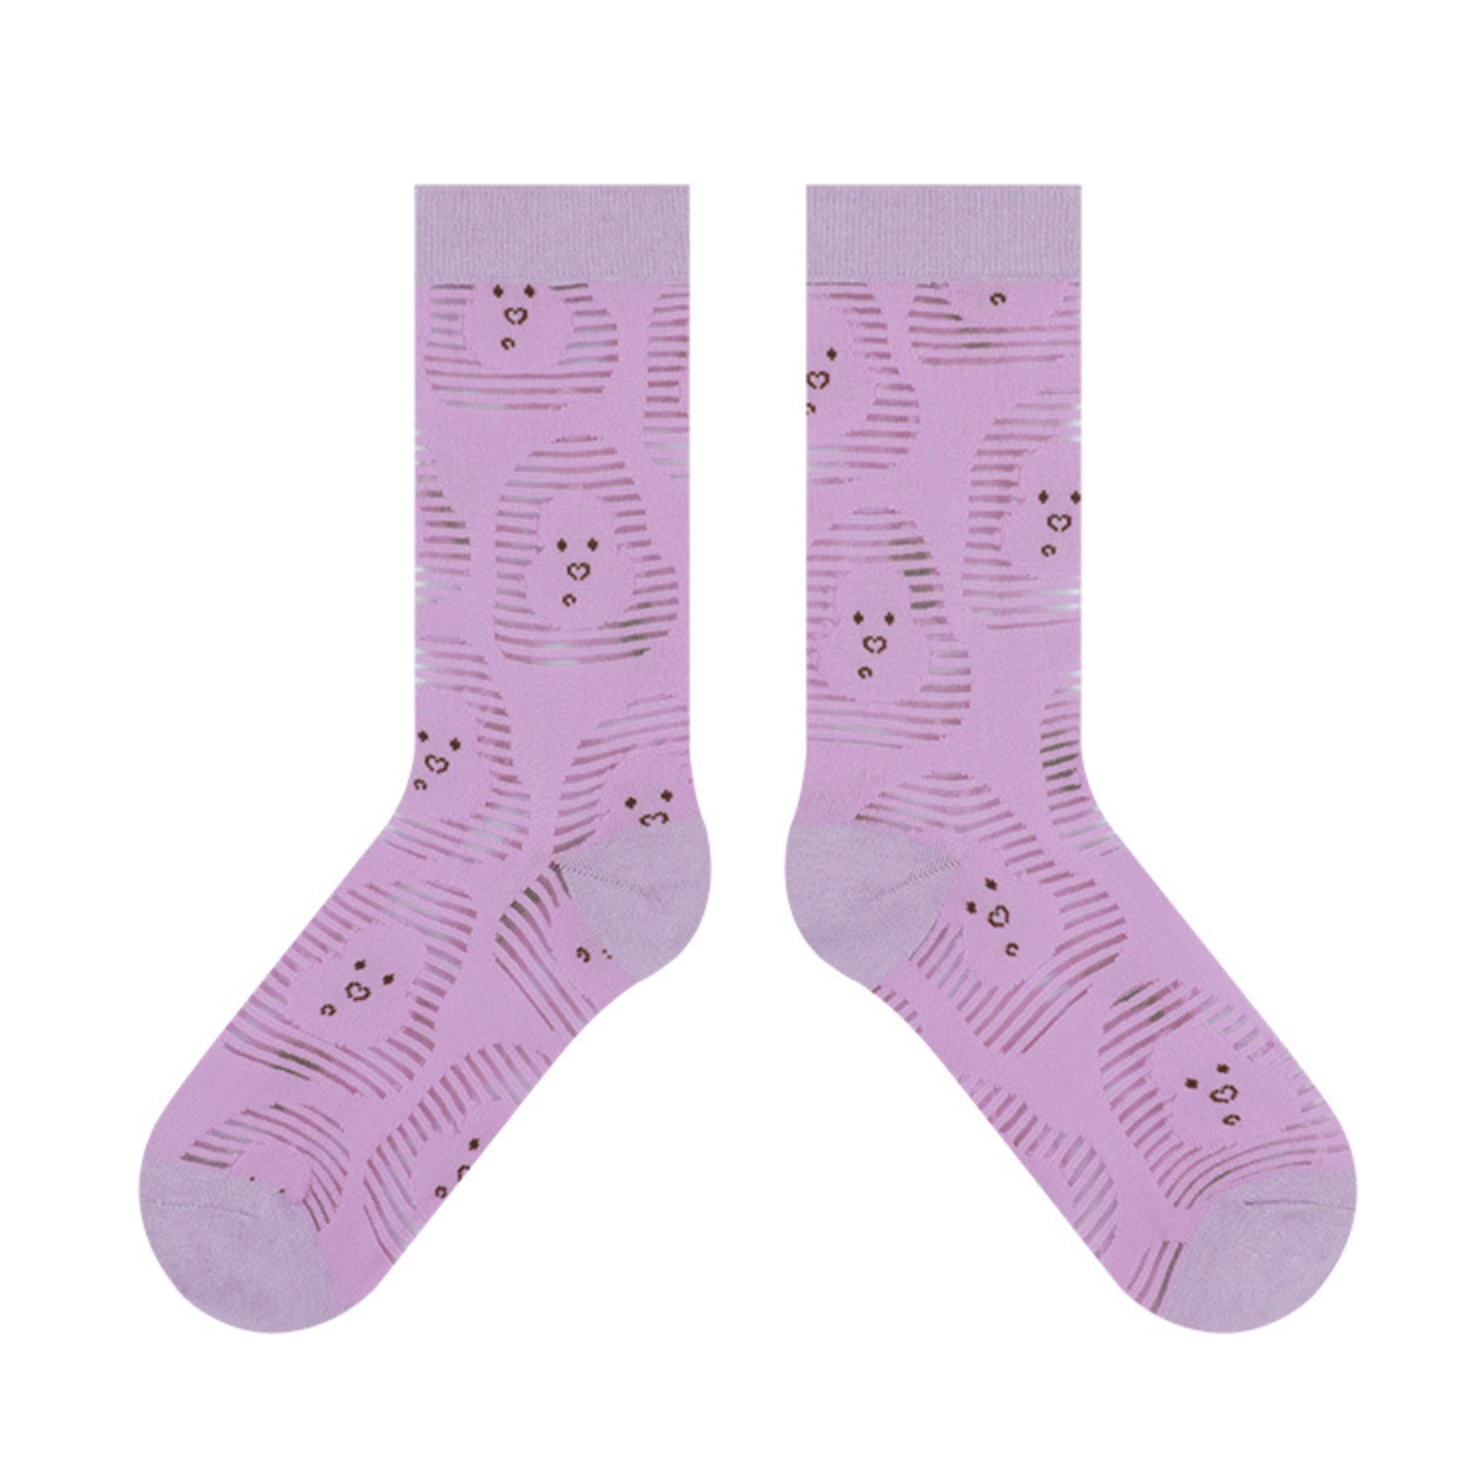 Cute Pink and Blue Sheer Socks